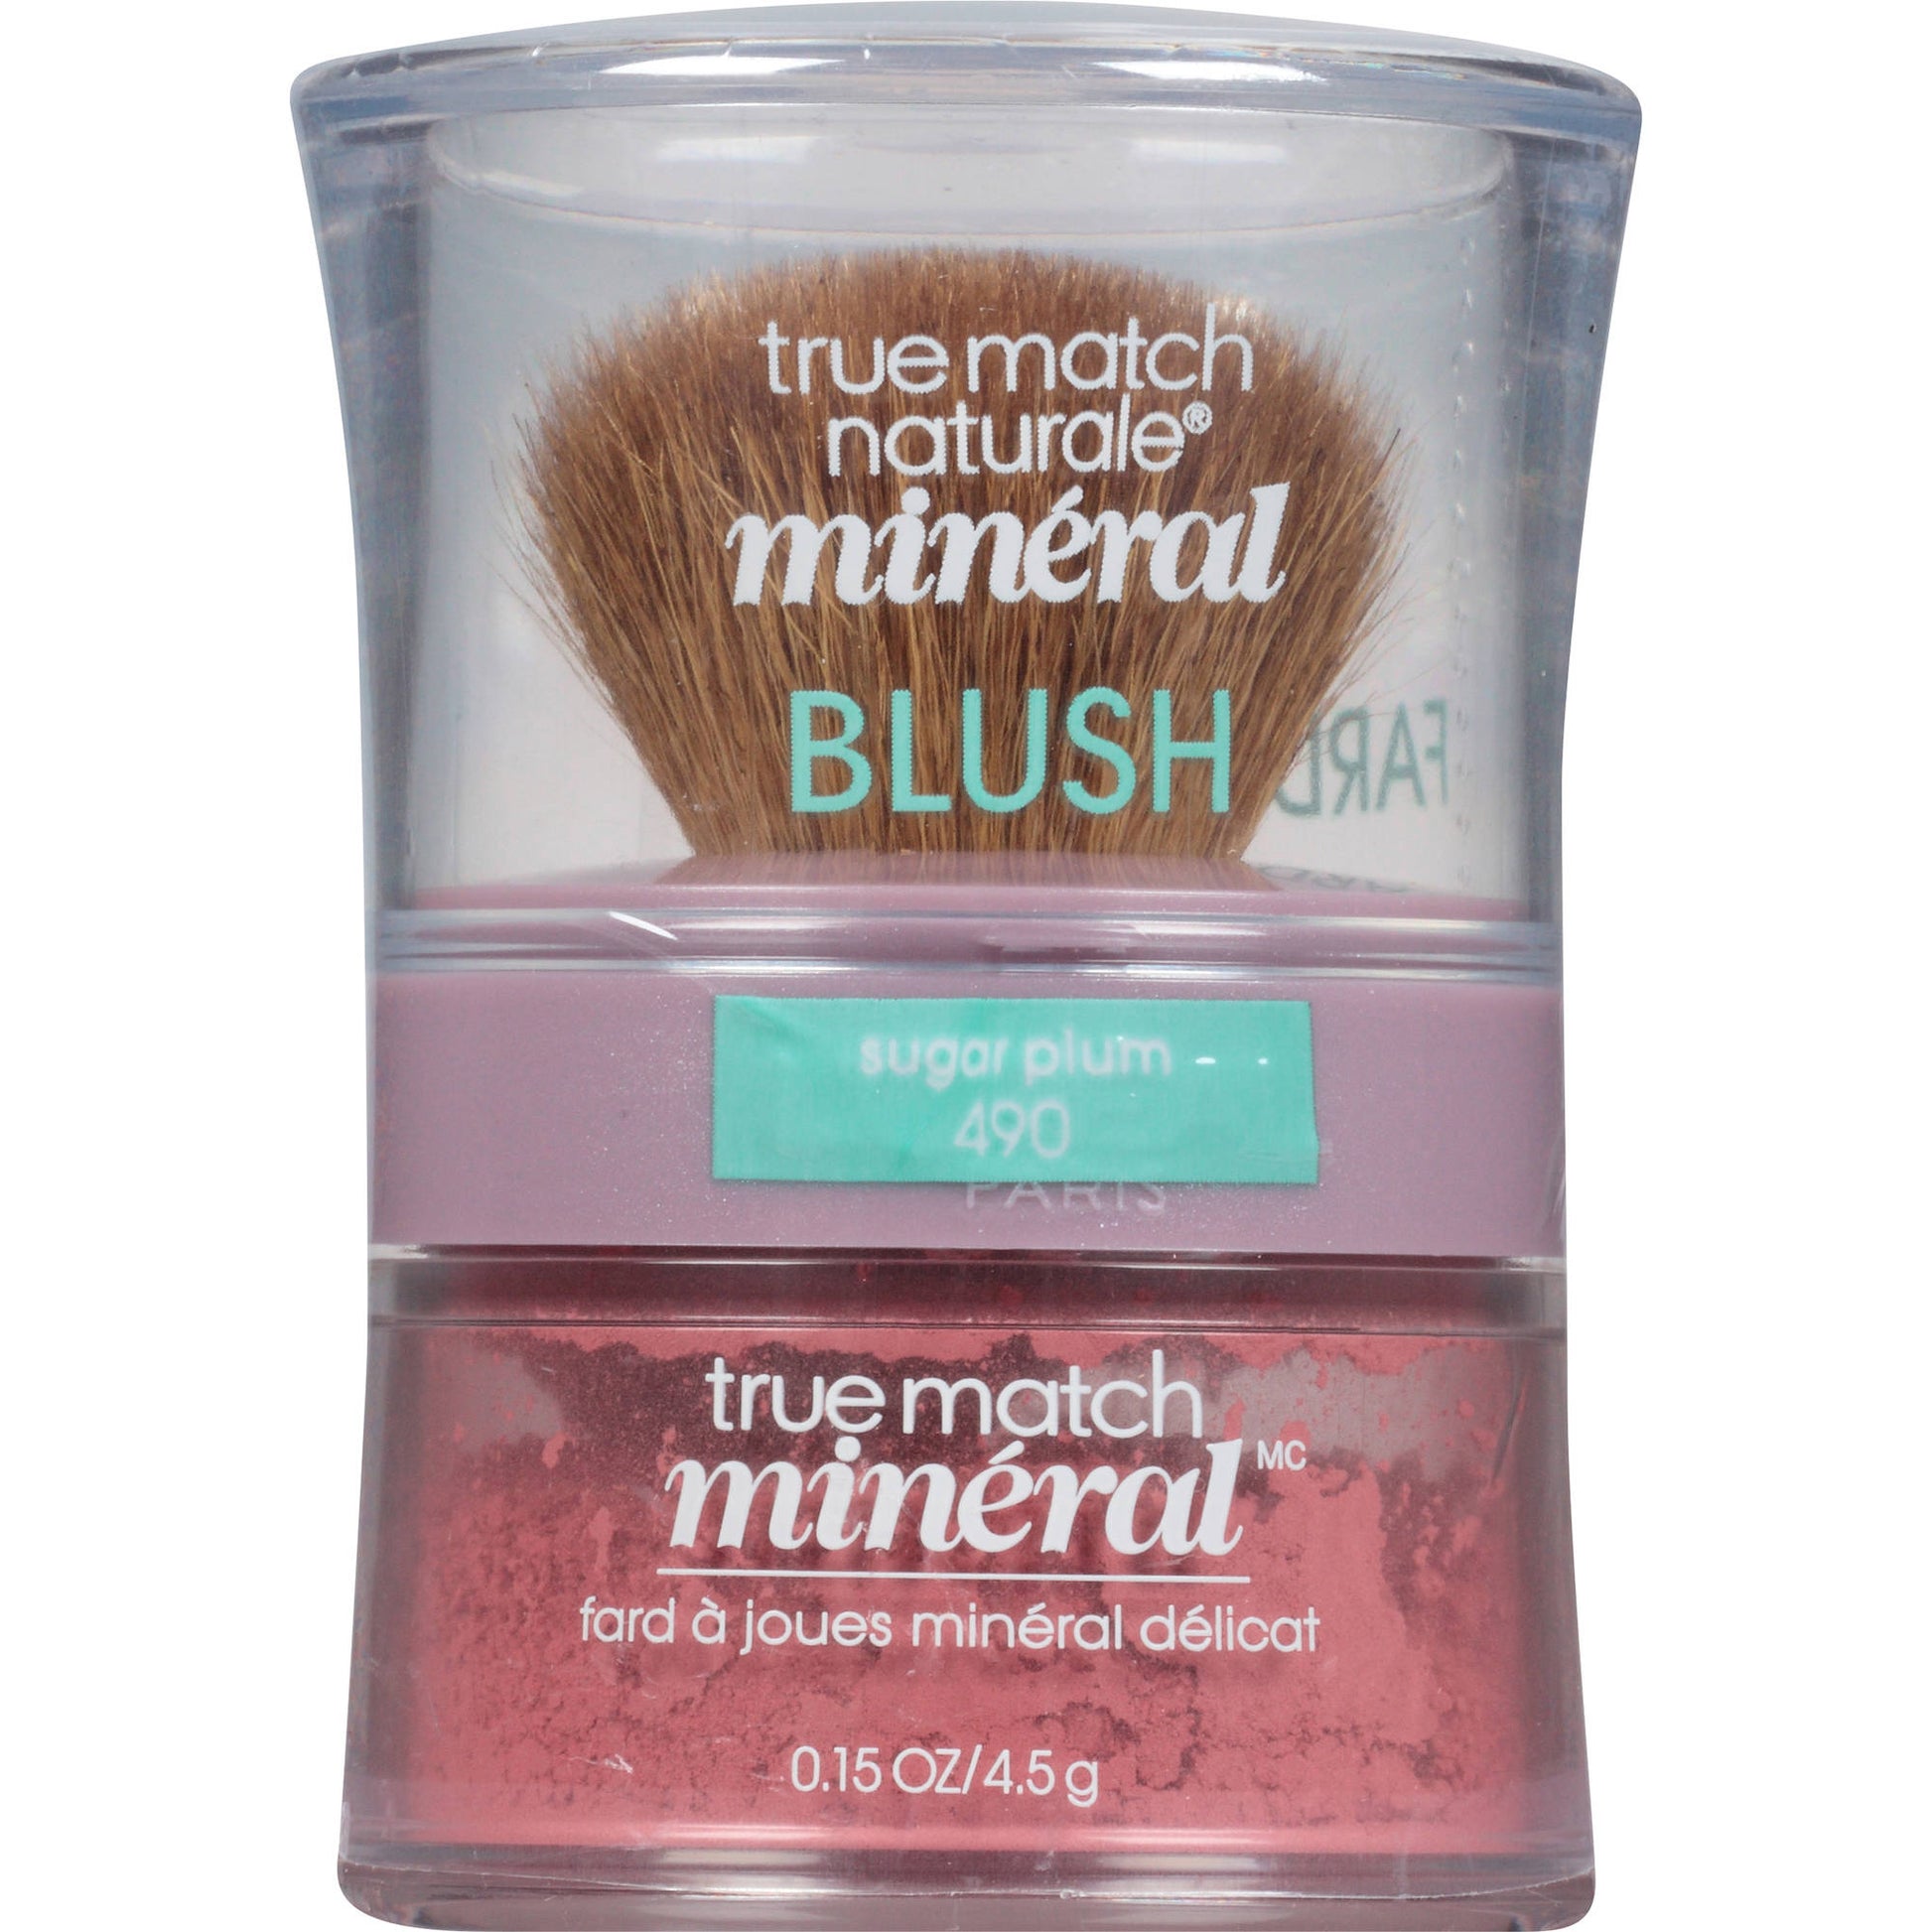 L'OREAL True Match Naturale Gentle Mineral Blush, Sugar Plum 490, 0.15 Oz - ADDROS.COM